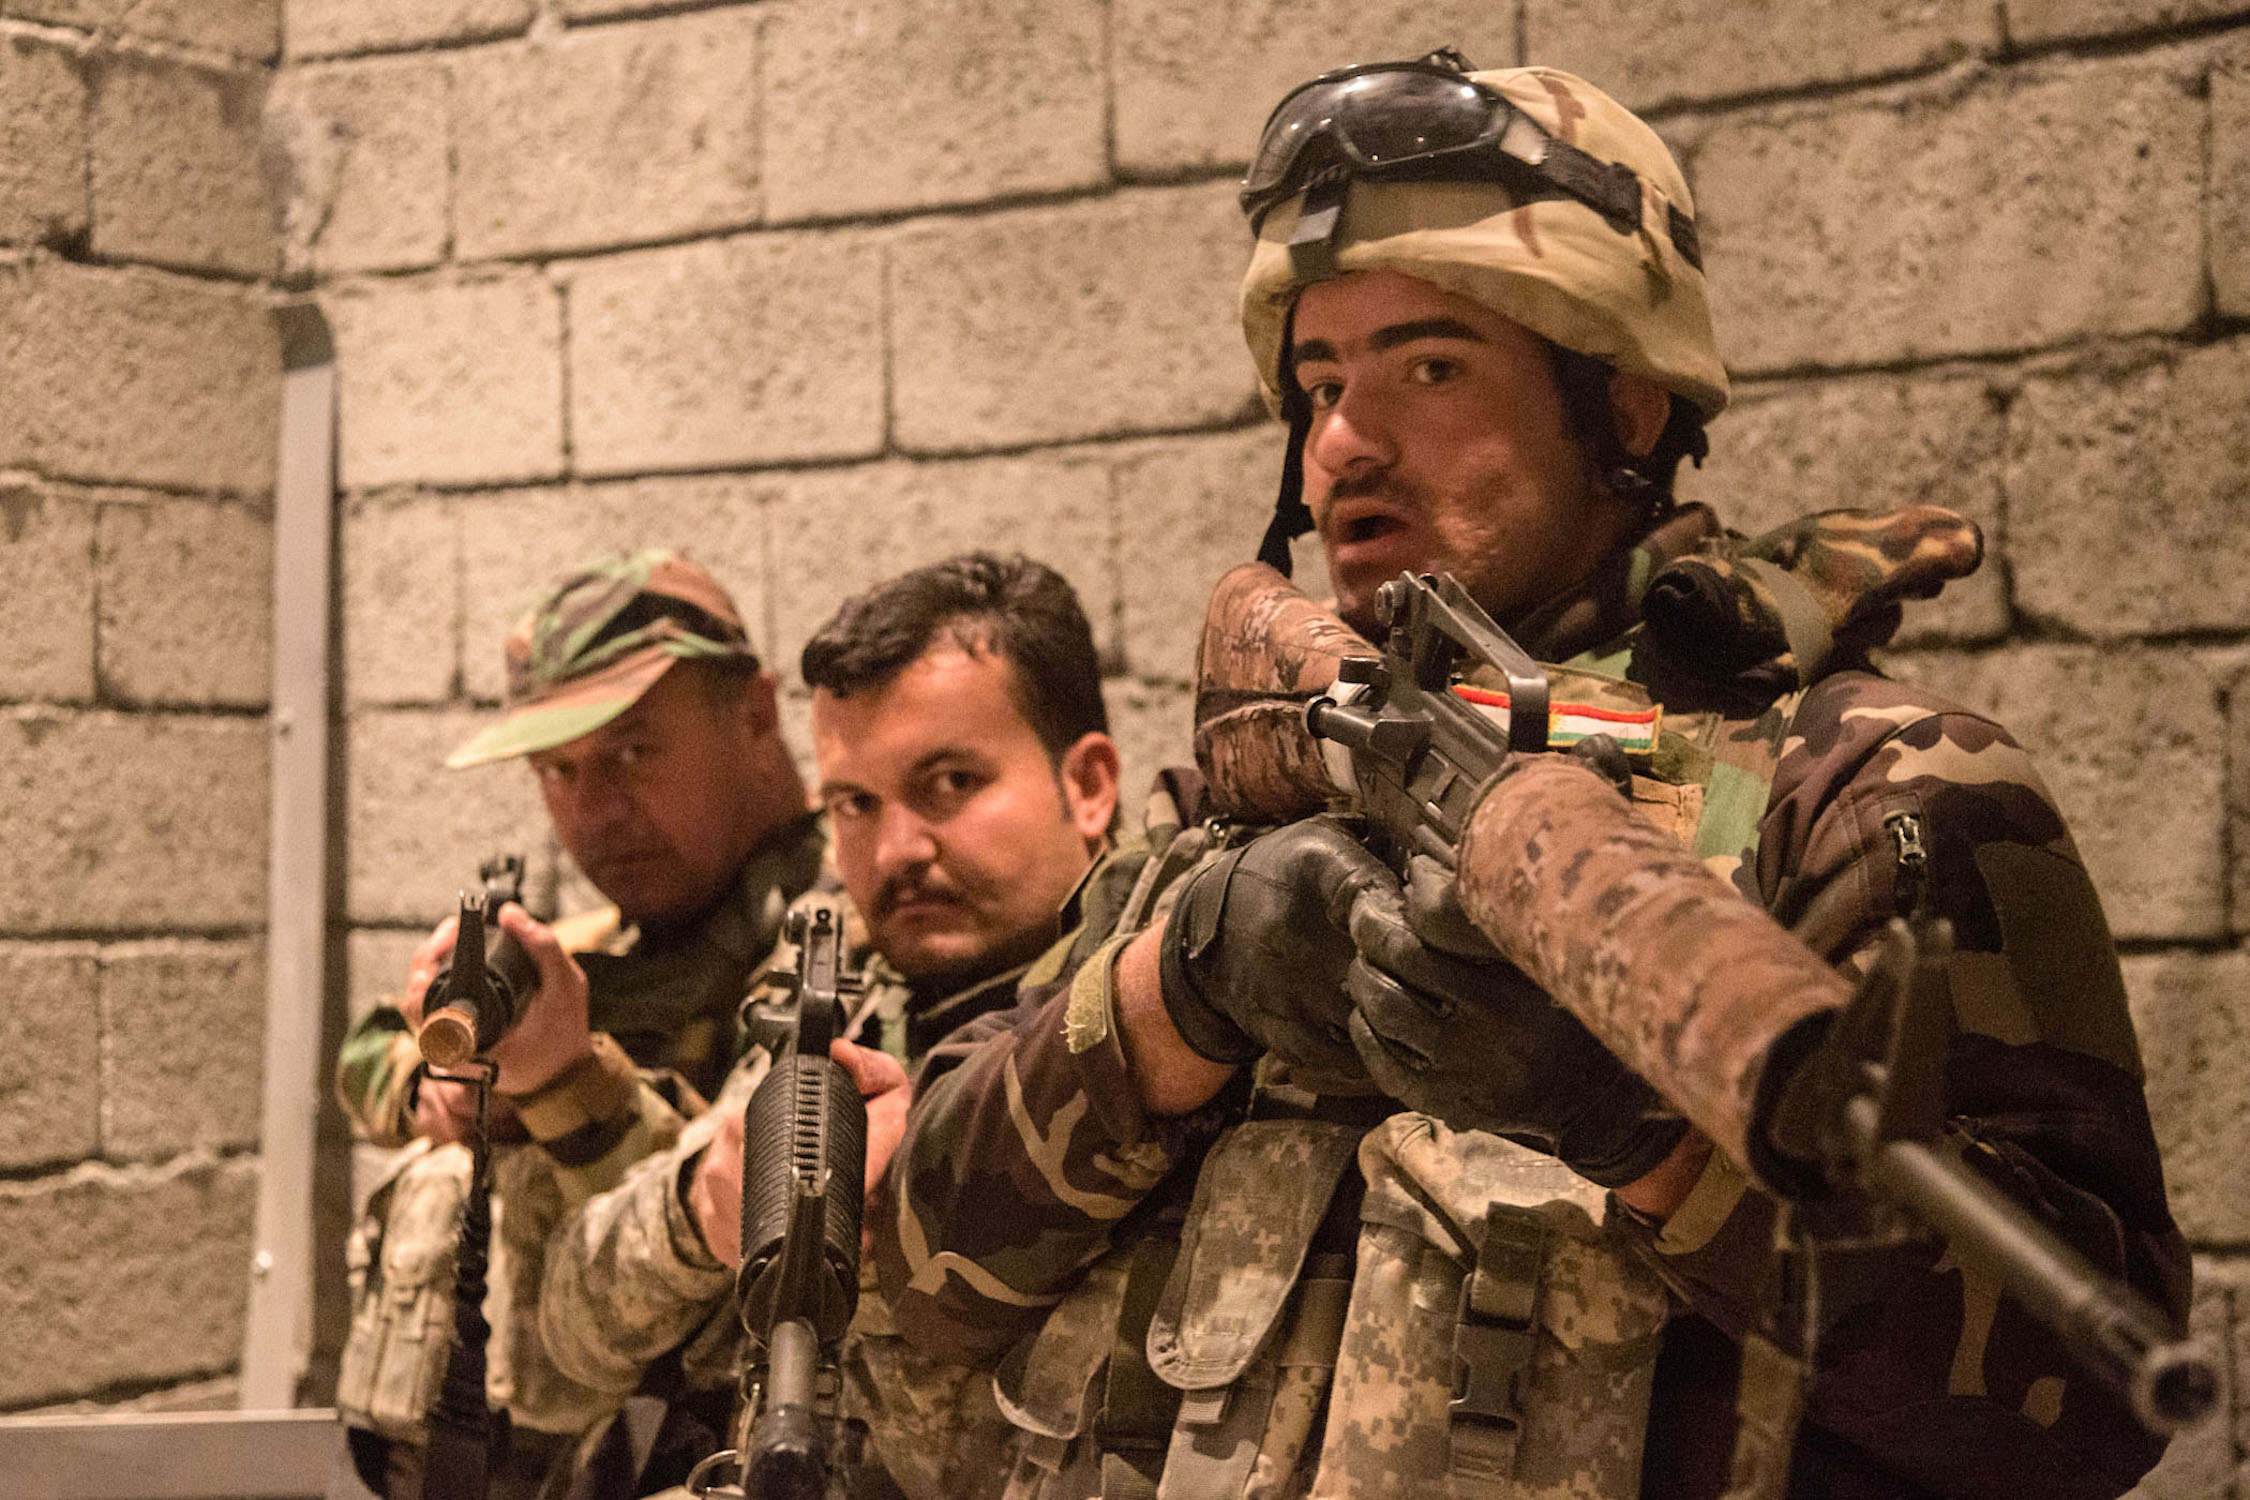 Peshmerga soldiers practice urban room clearing during training at Bneslawa, Iraq